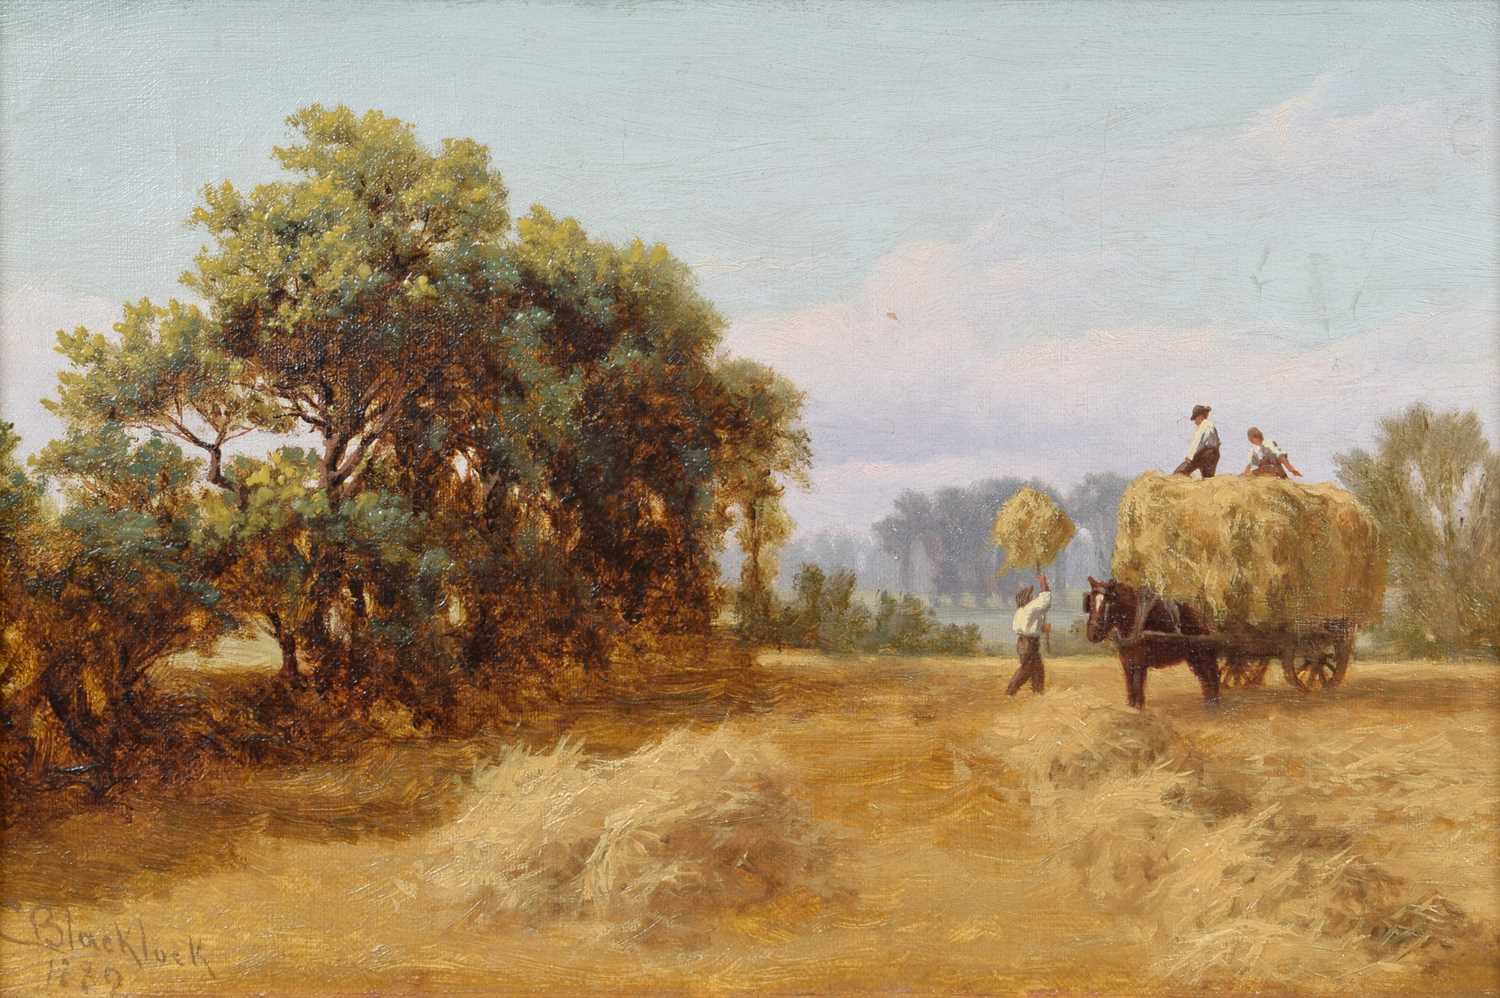 Charles Blacklock (British 19th century) "Evening in the Hayfield"